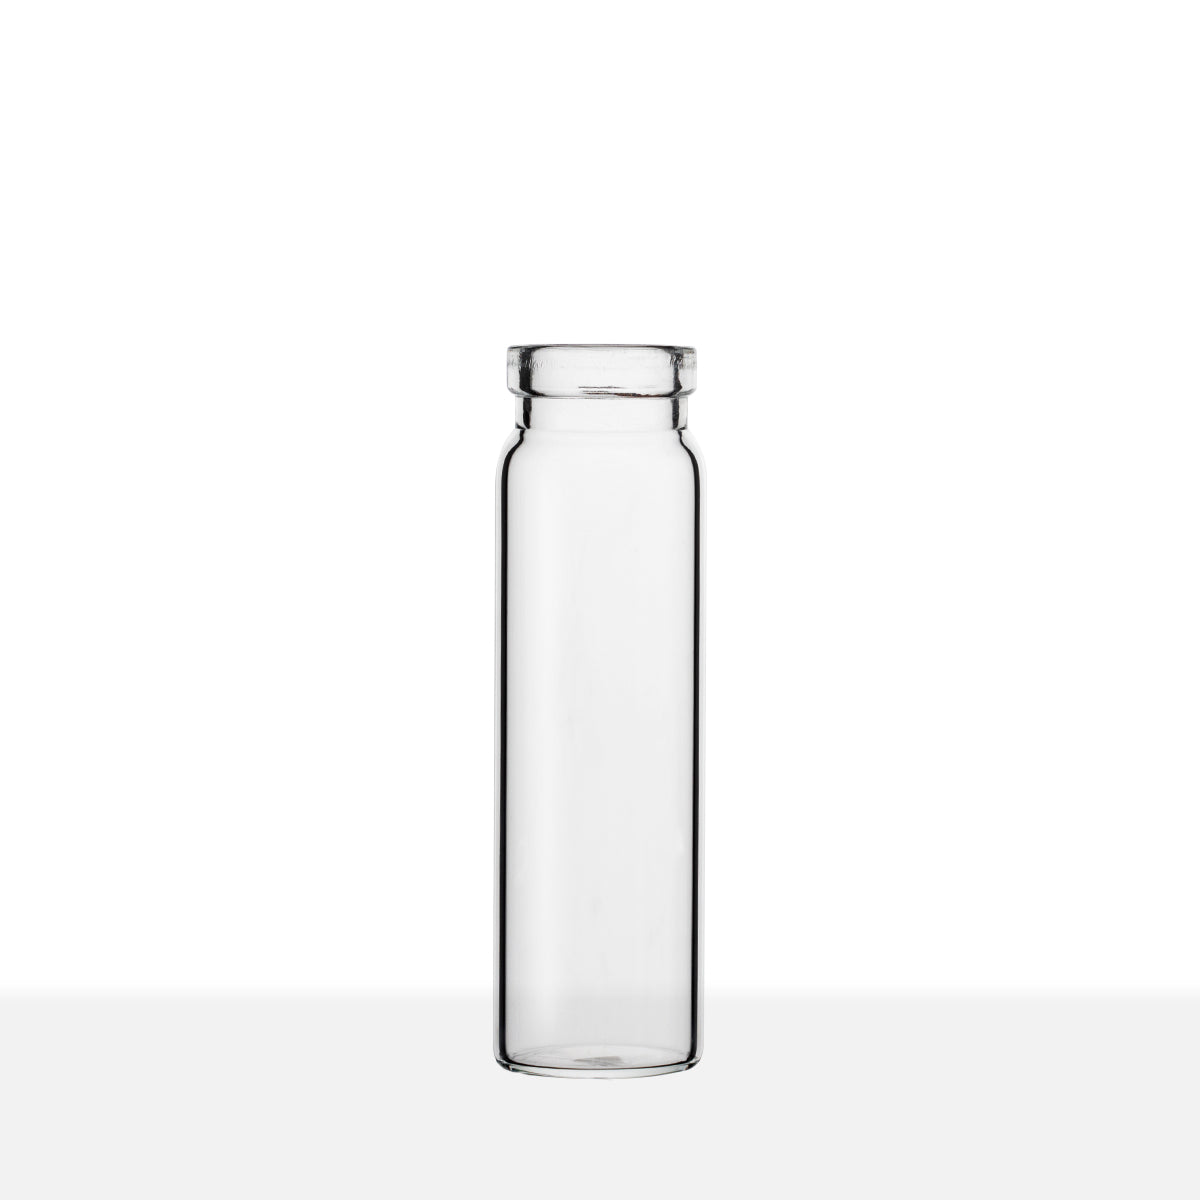 PATENT LIP GLASS VIALS - CLEAR Item #:VCPC2170